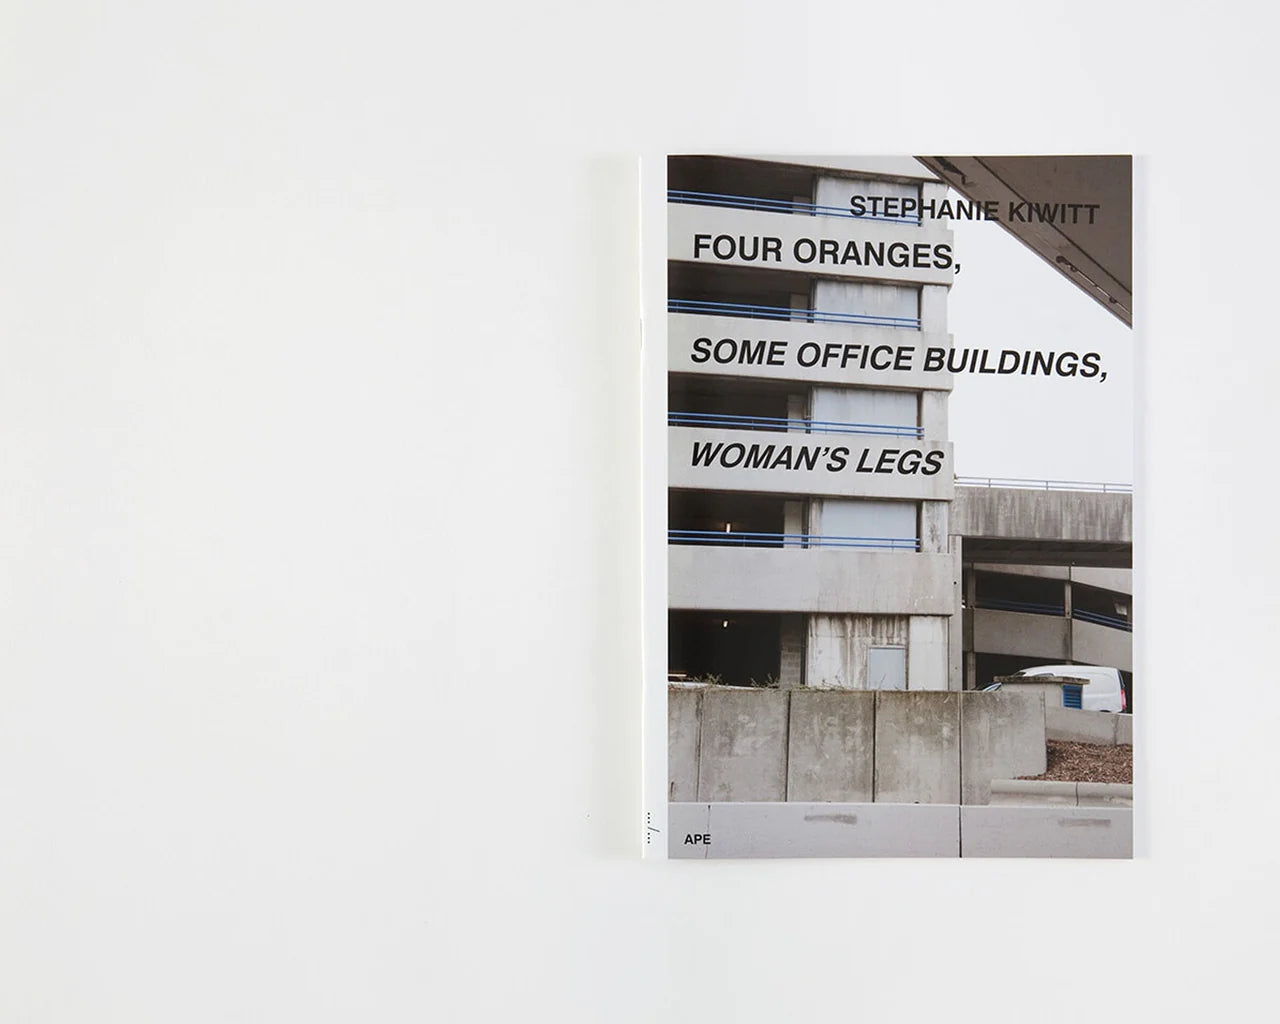 Four oranges, some office buildings, woman’s legs by Stephanie Kiwitt